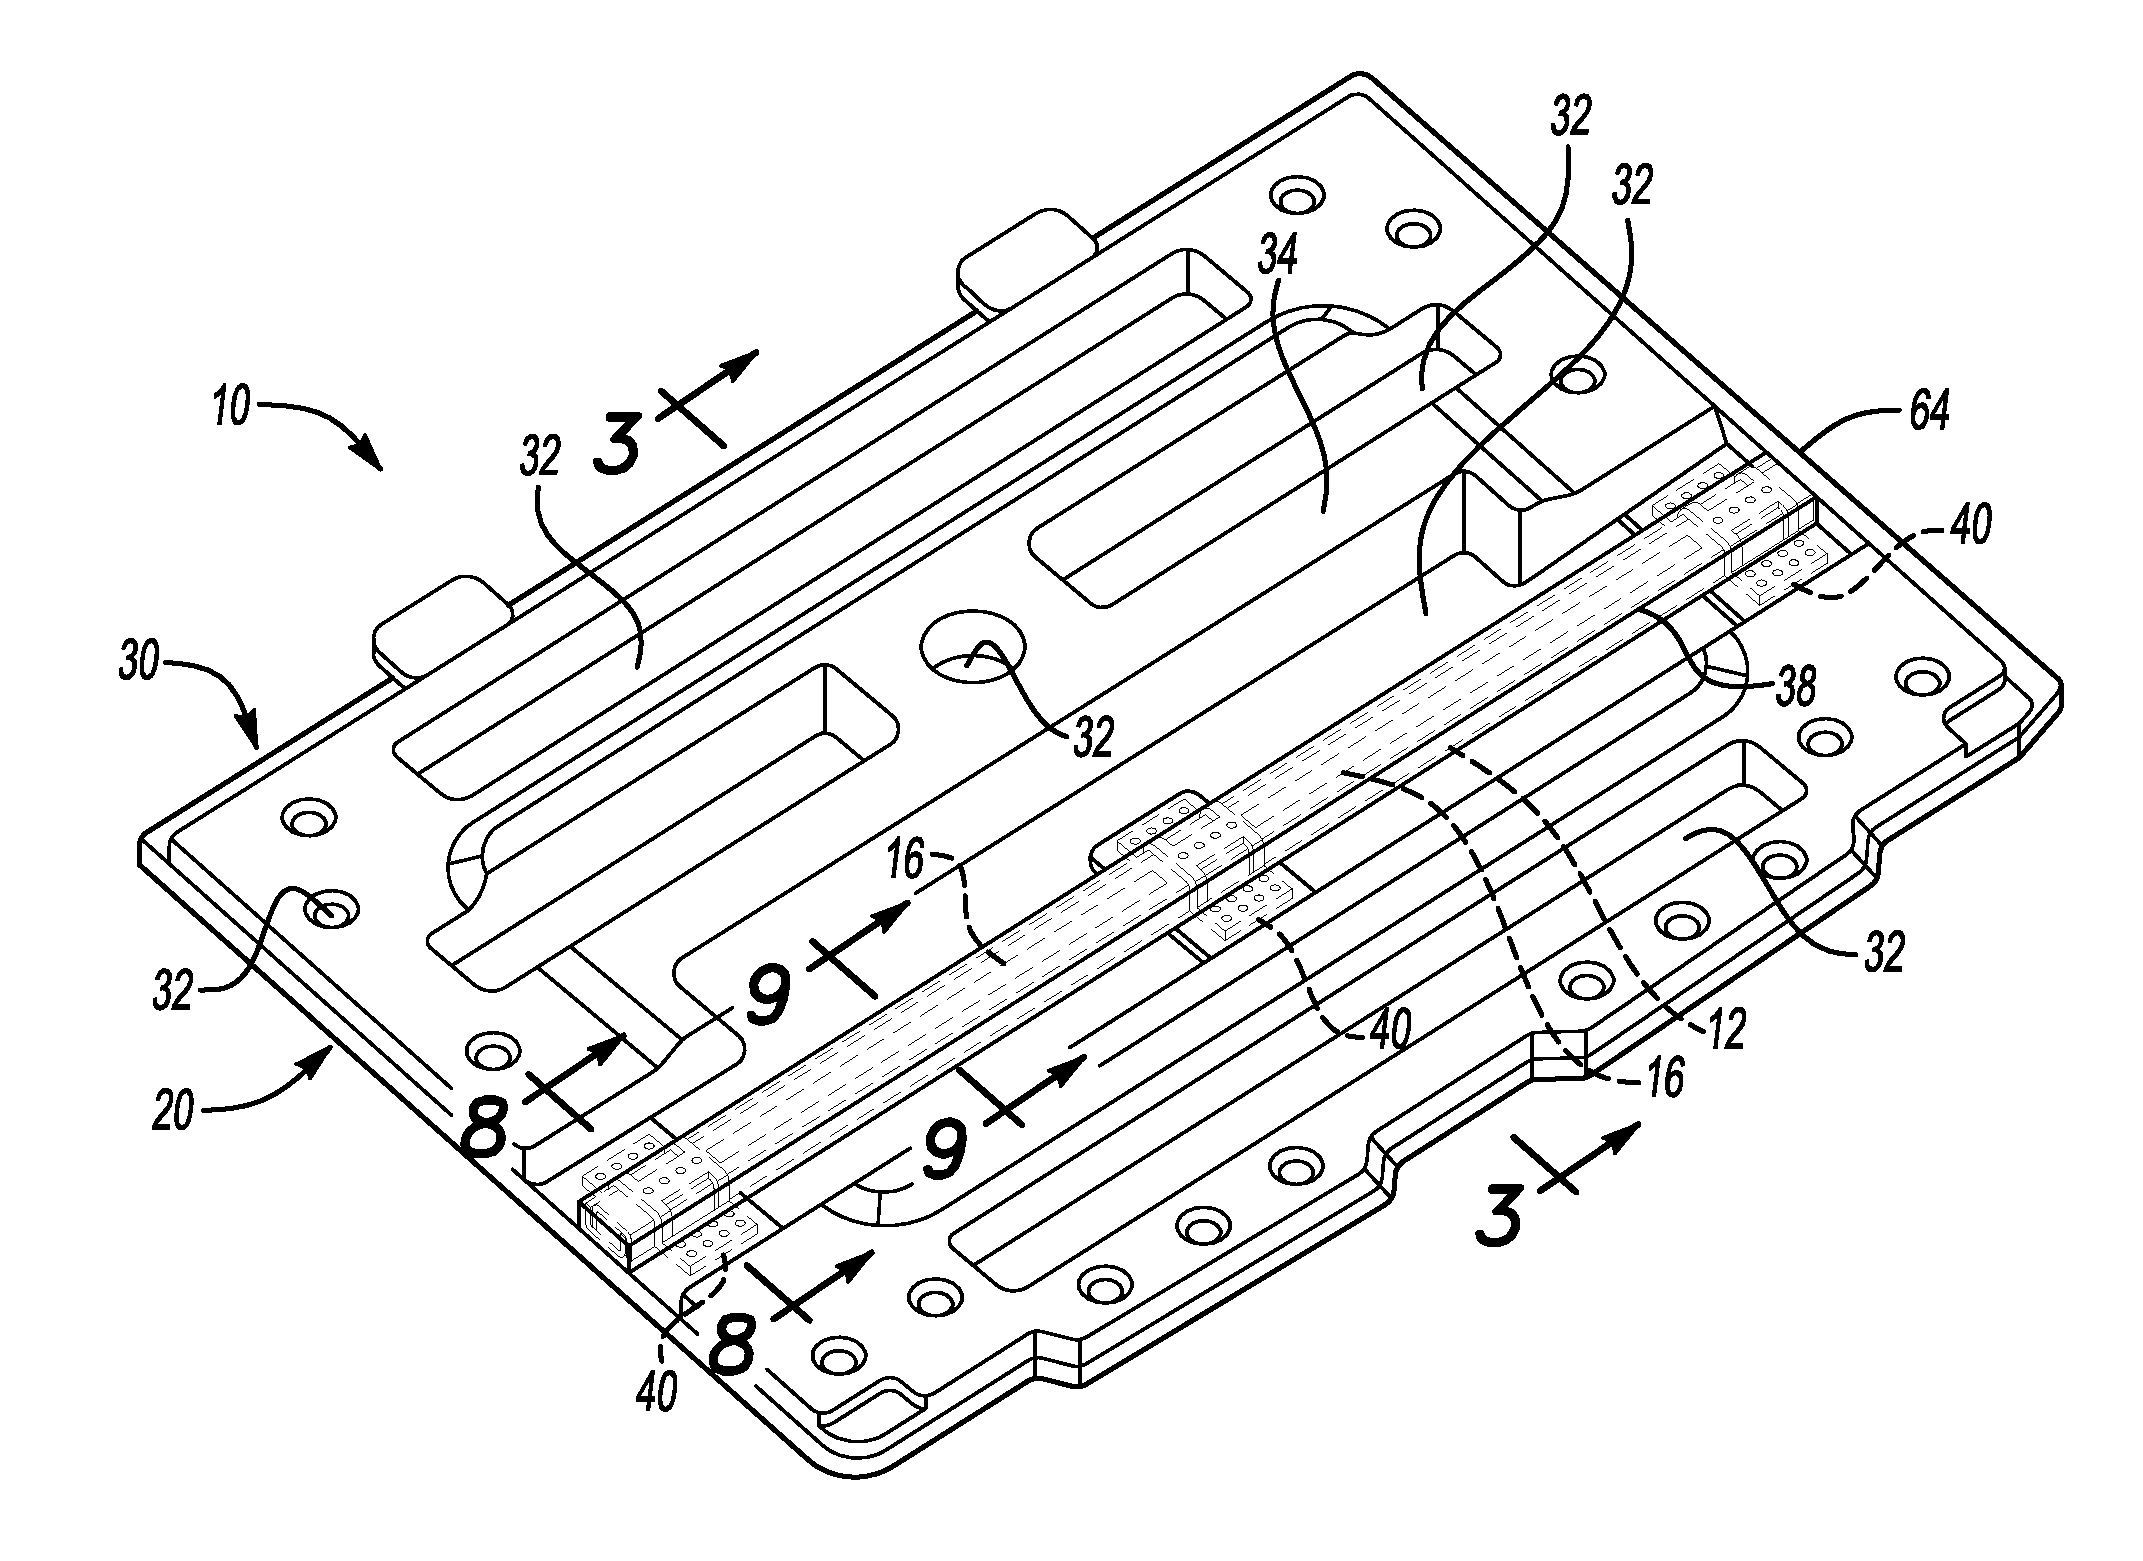 Load bearing panel assembly